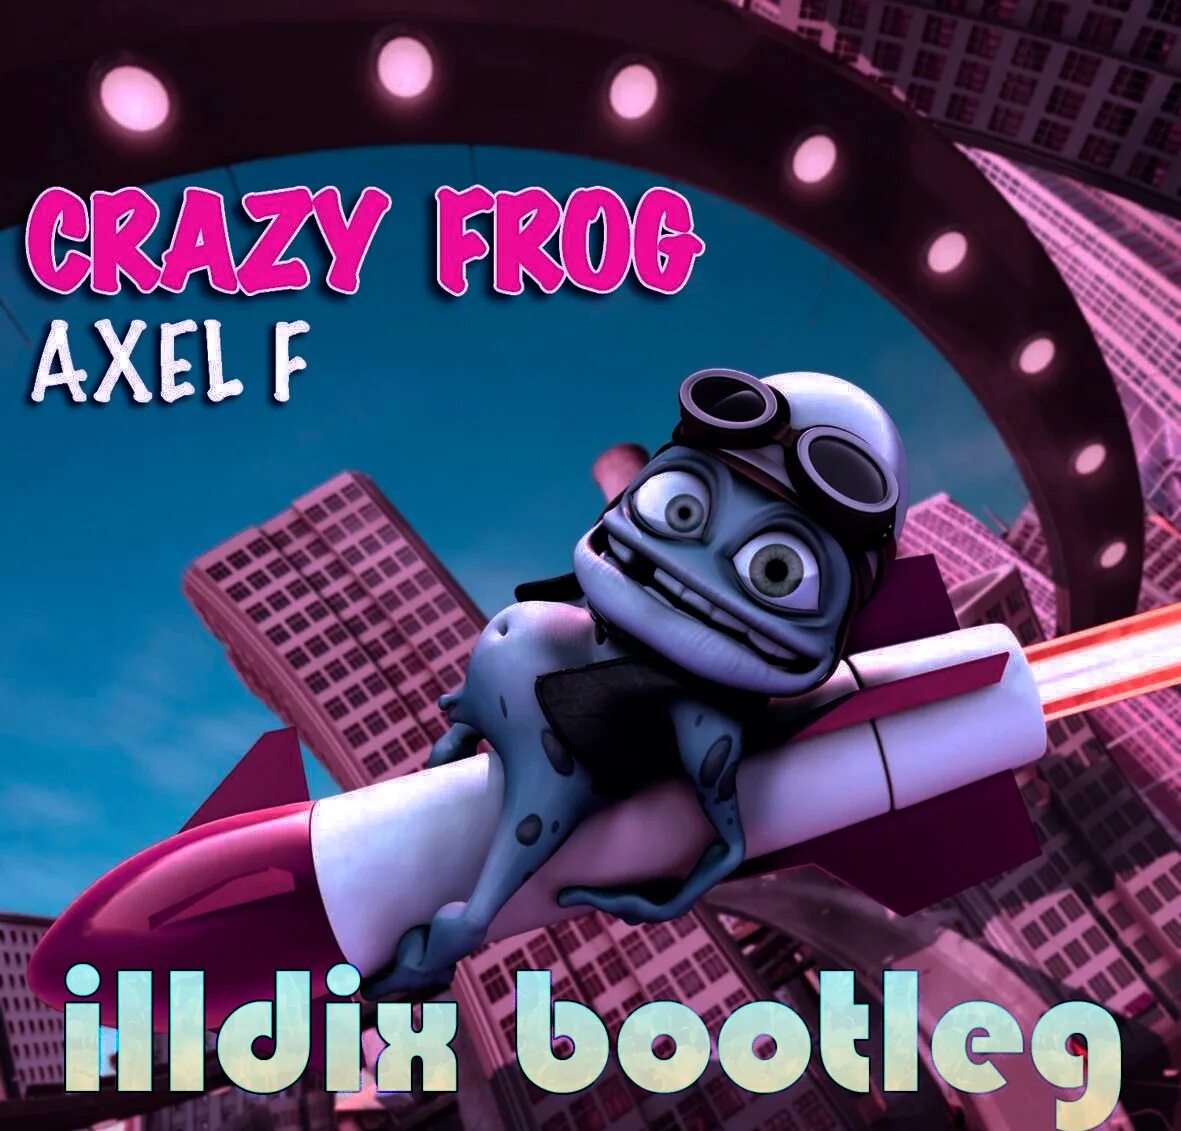 Crazy Frog Axel. Crazy Frog Axel f. Даниэль Мальмедаль Crazy Frog. Crazy Frog Axel f 2006. Axel f remix